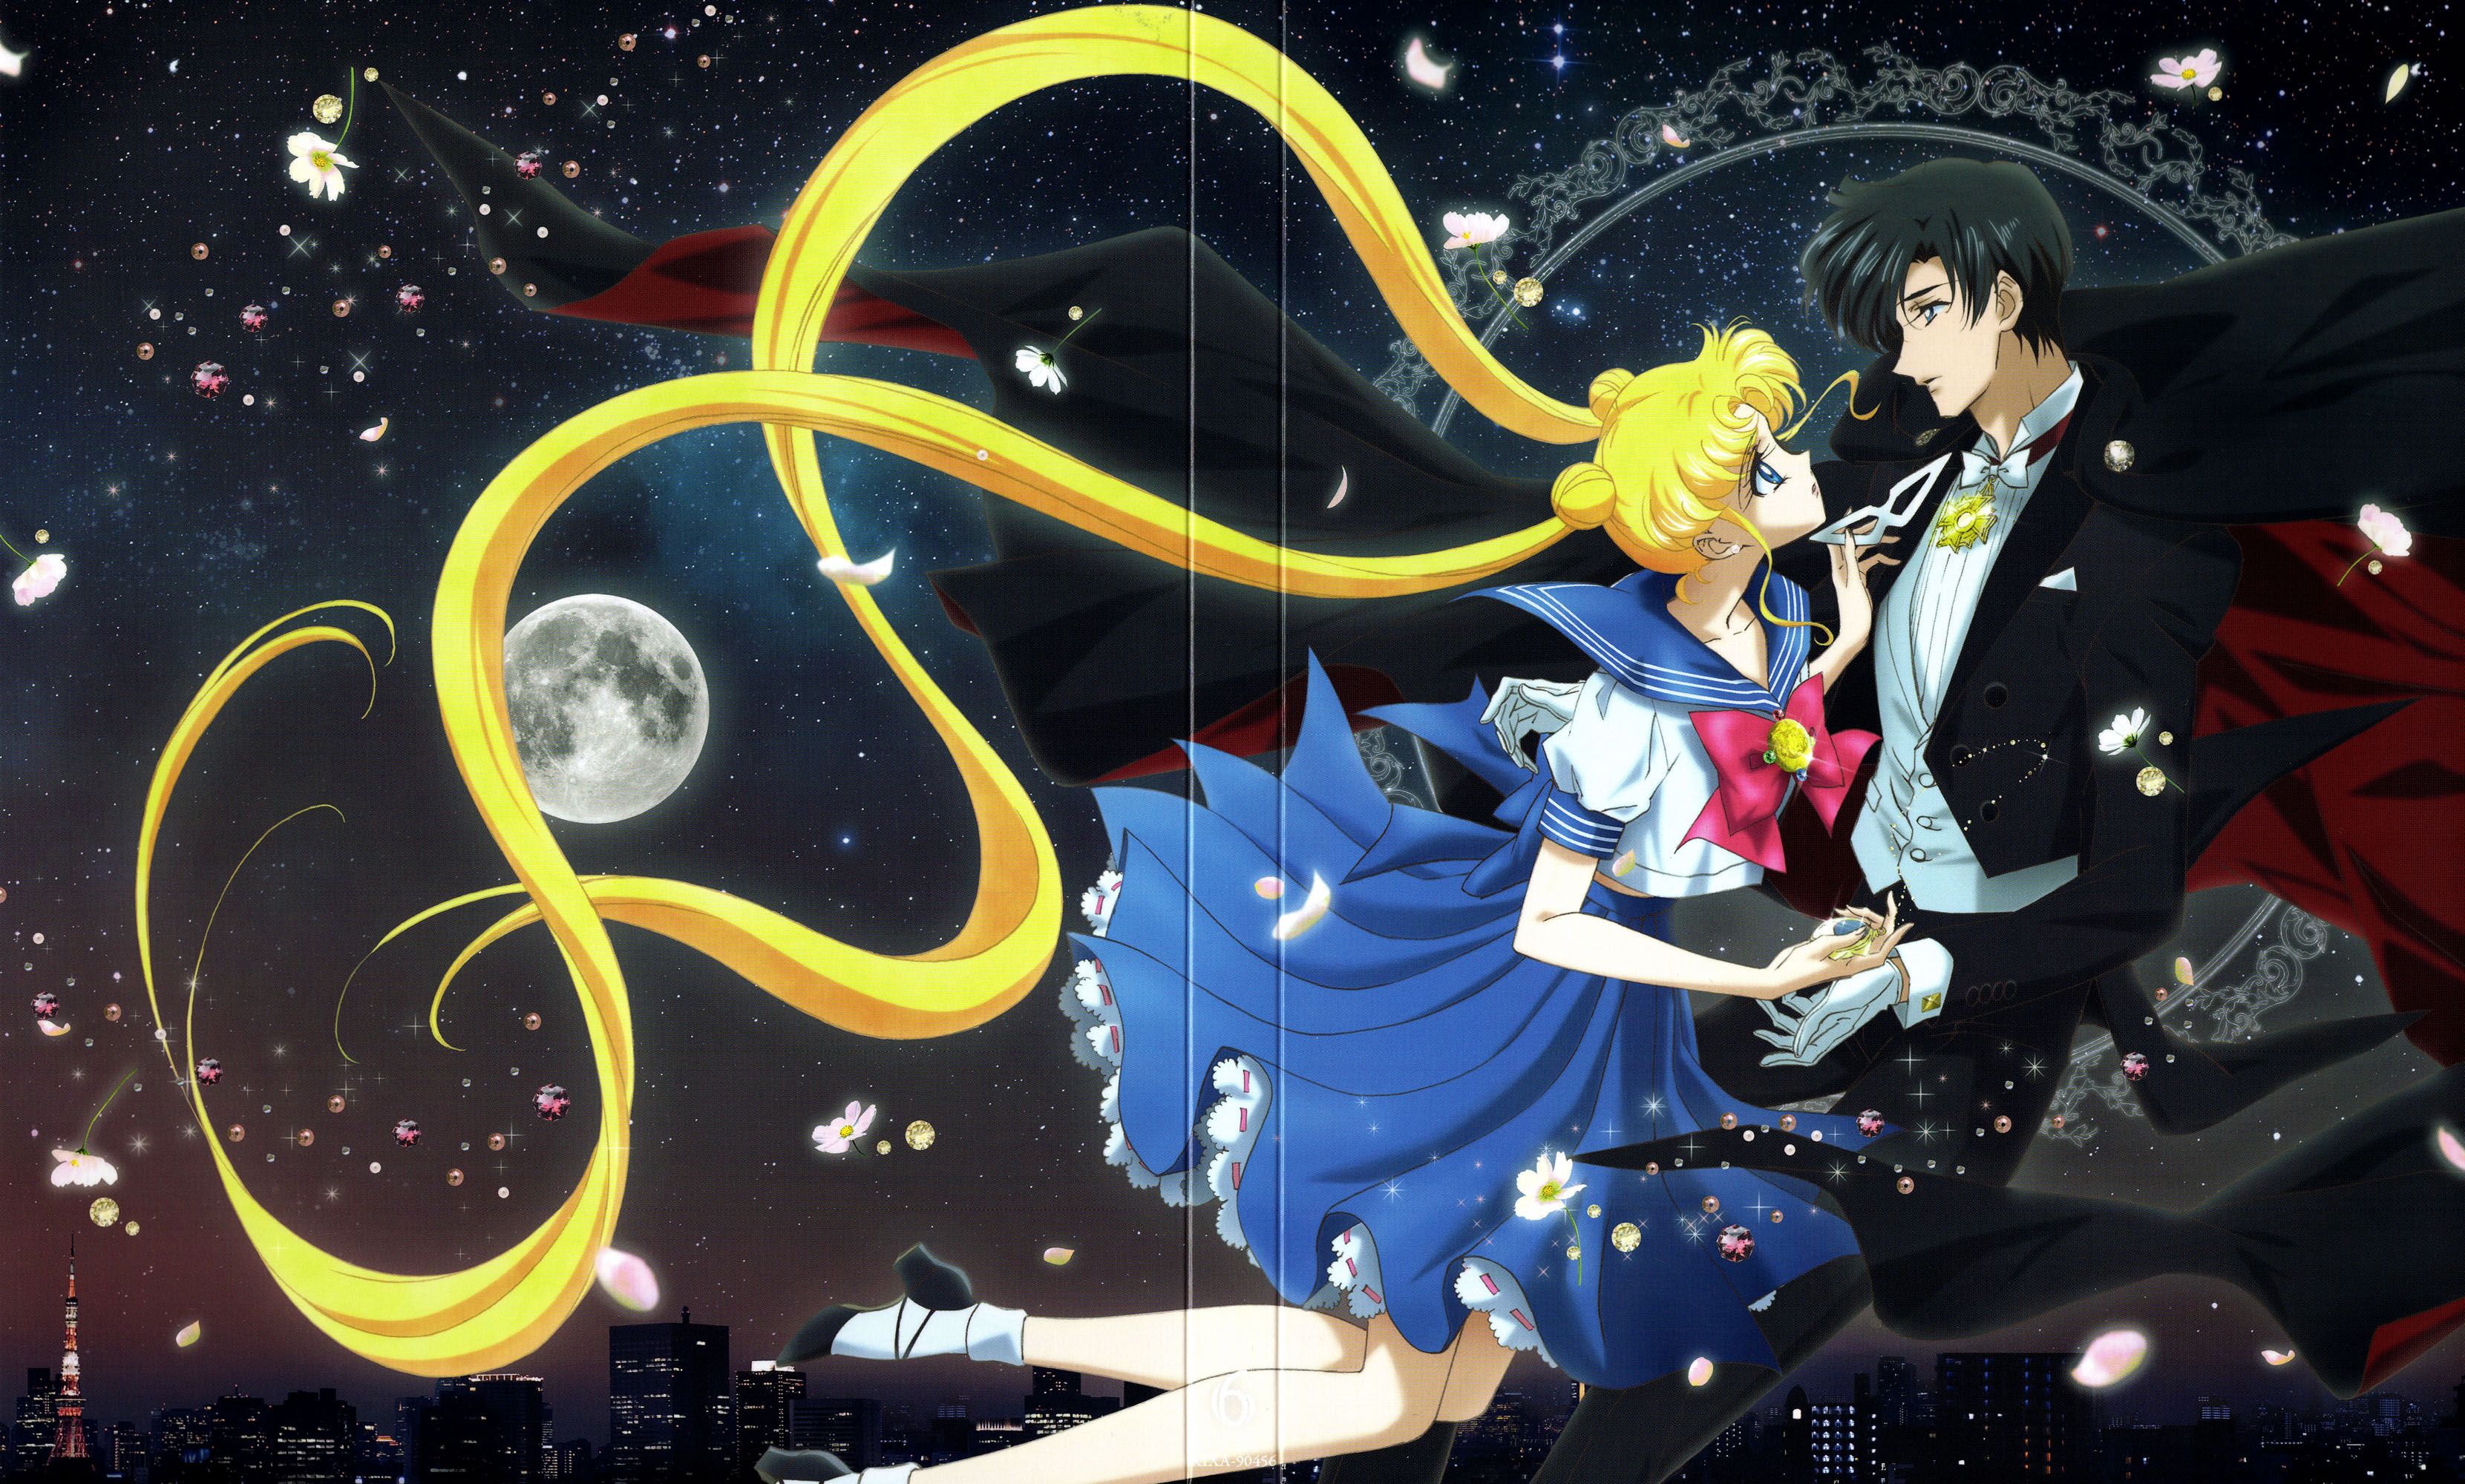 Fondos de pantalla de Sailor Moon - FondosMil